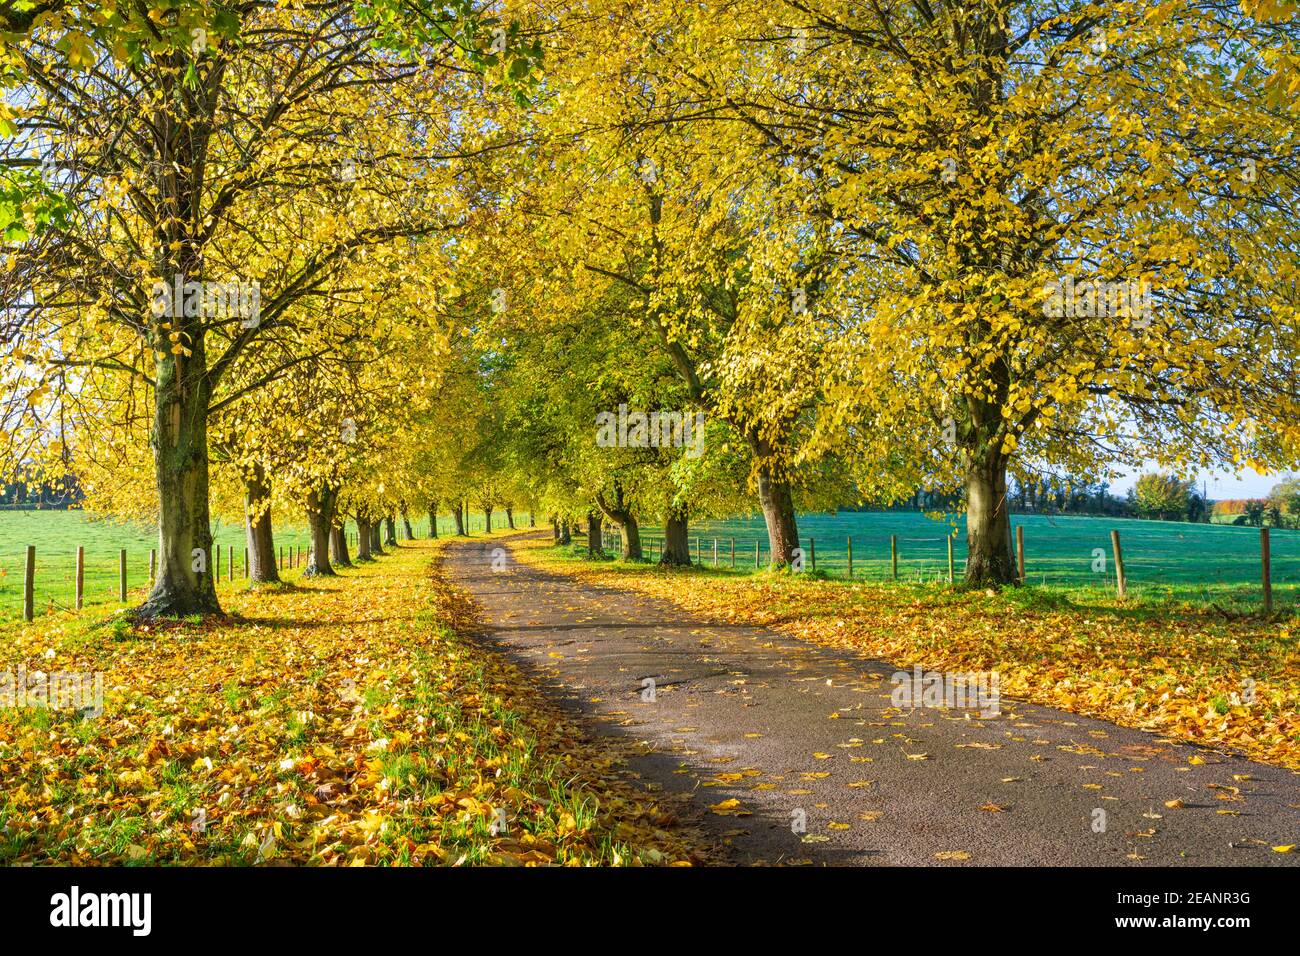 Avenue of autumn beech trees with colourful yellow leaves, Newbury, Berkshire, England, United Kingdom, Europe Stock Photo